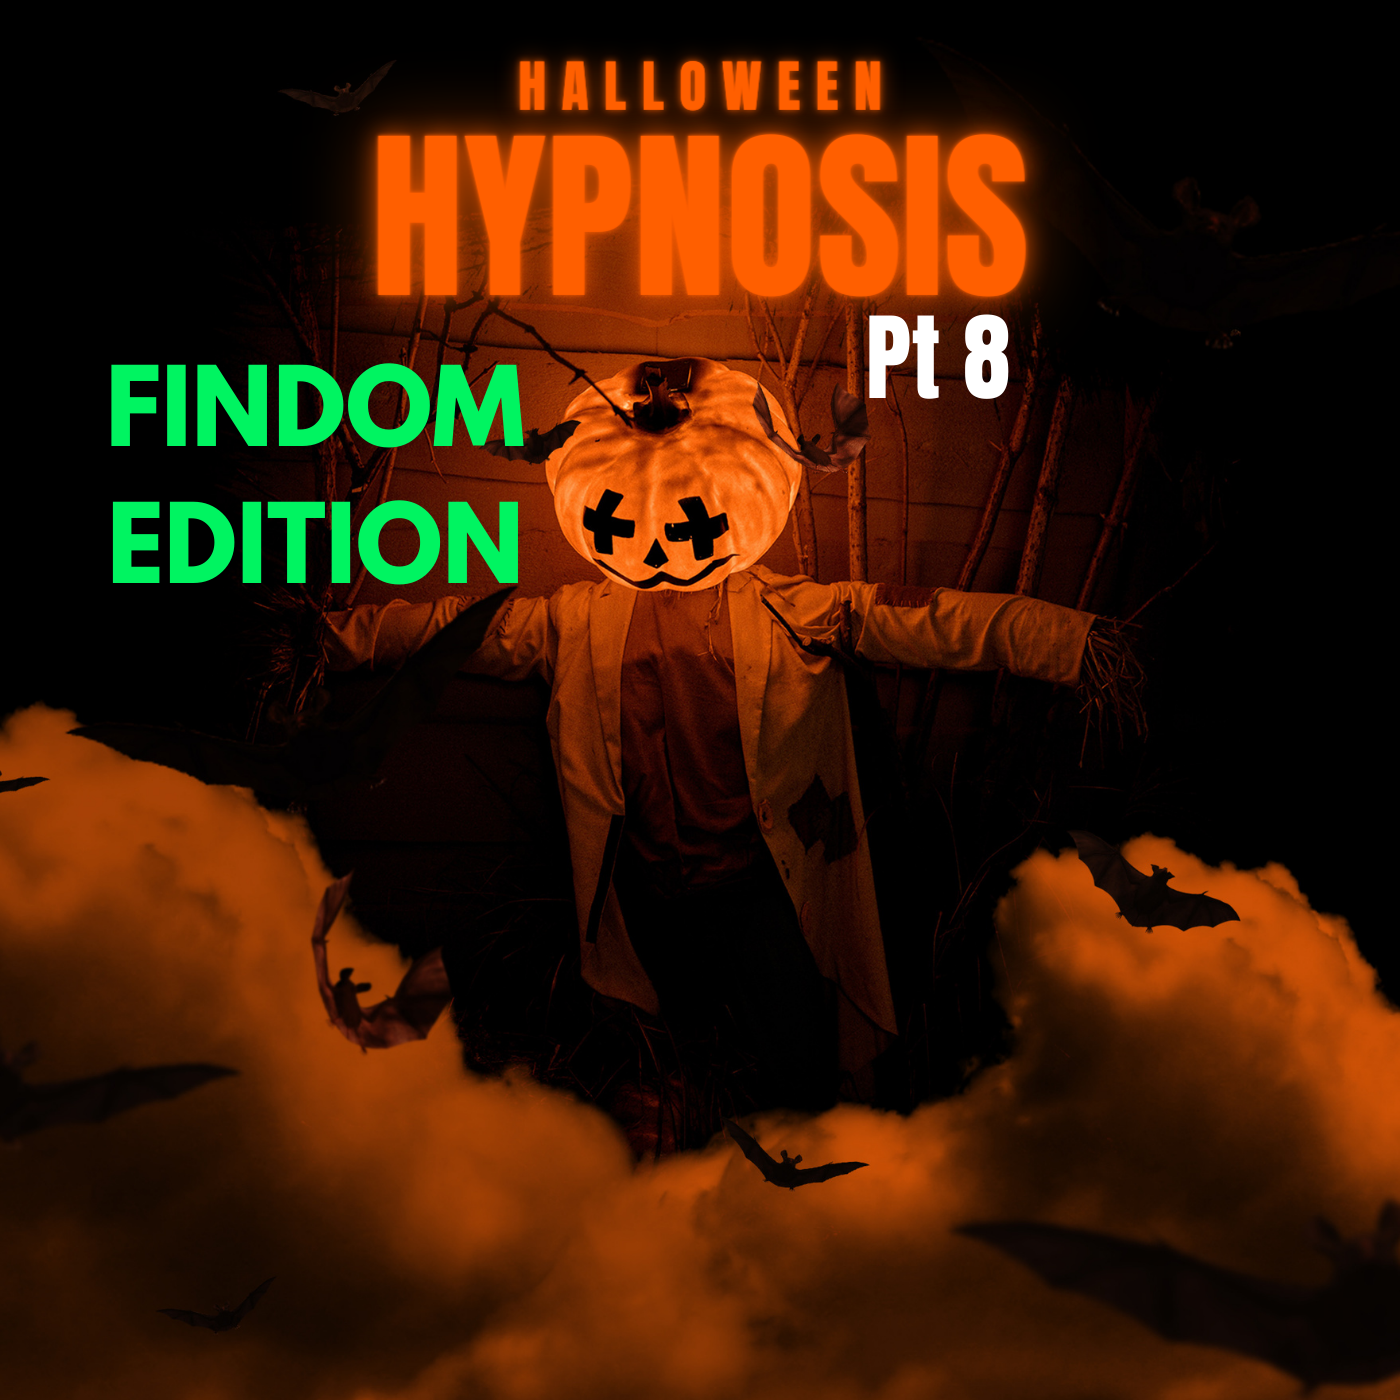 Halloween Hypnosis PT 8 FINDOM EDITION